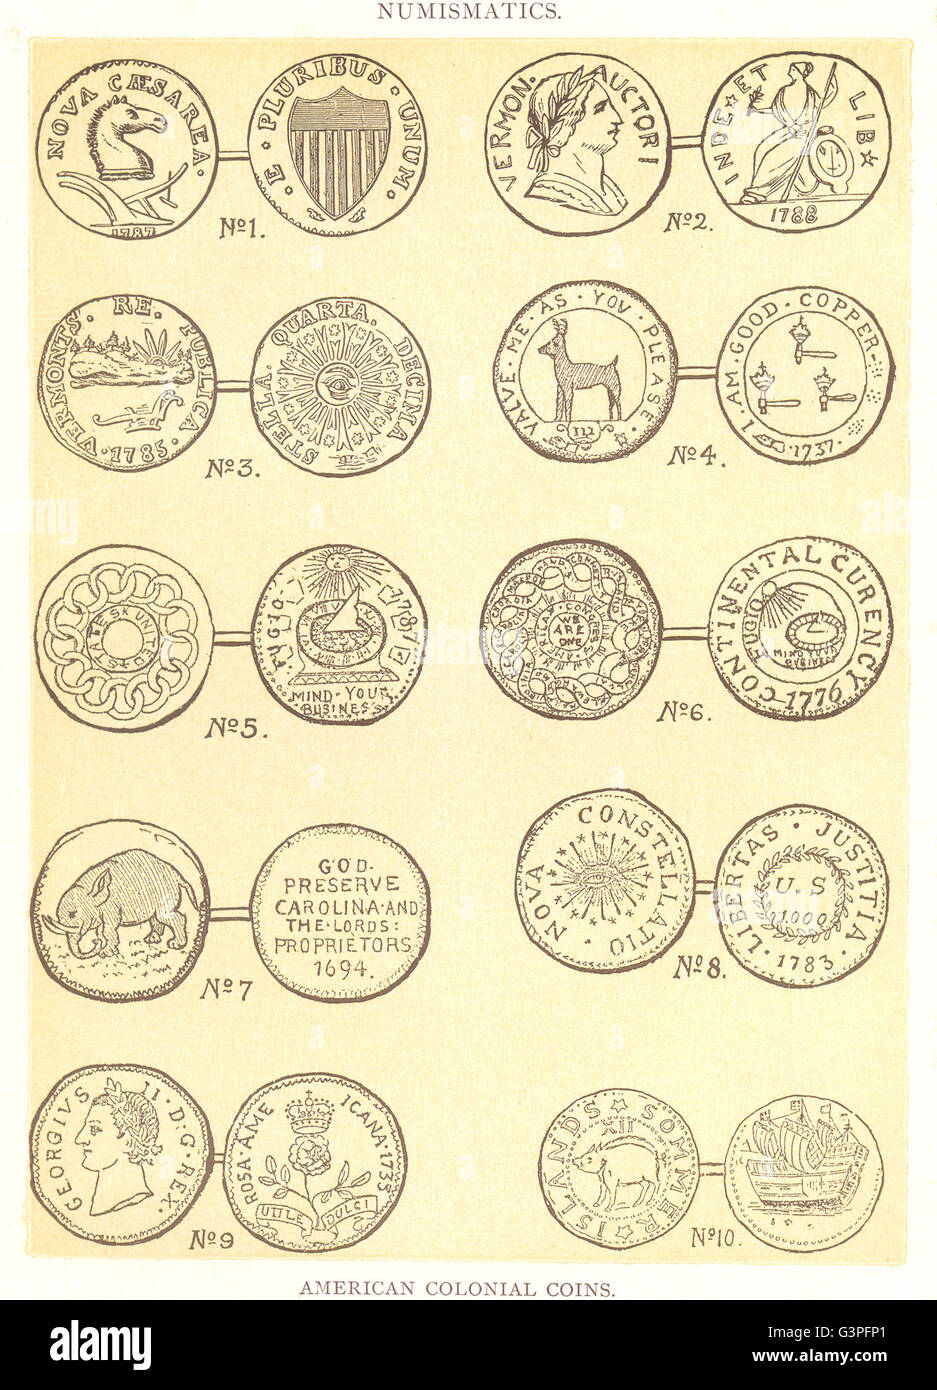 US-kolonialen Münze: NJ Cent VT token Granby Fugio Carolina Nova Constellatio, 1907 Stockfoto